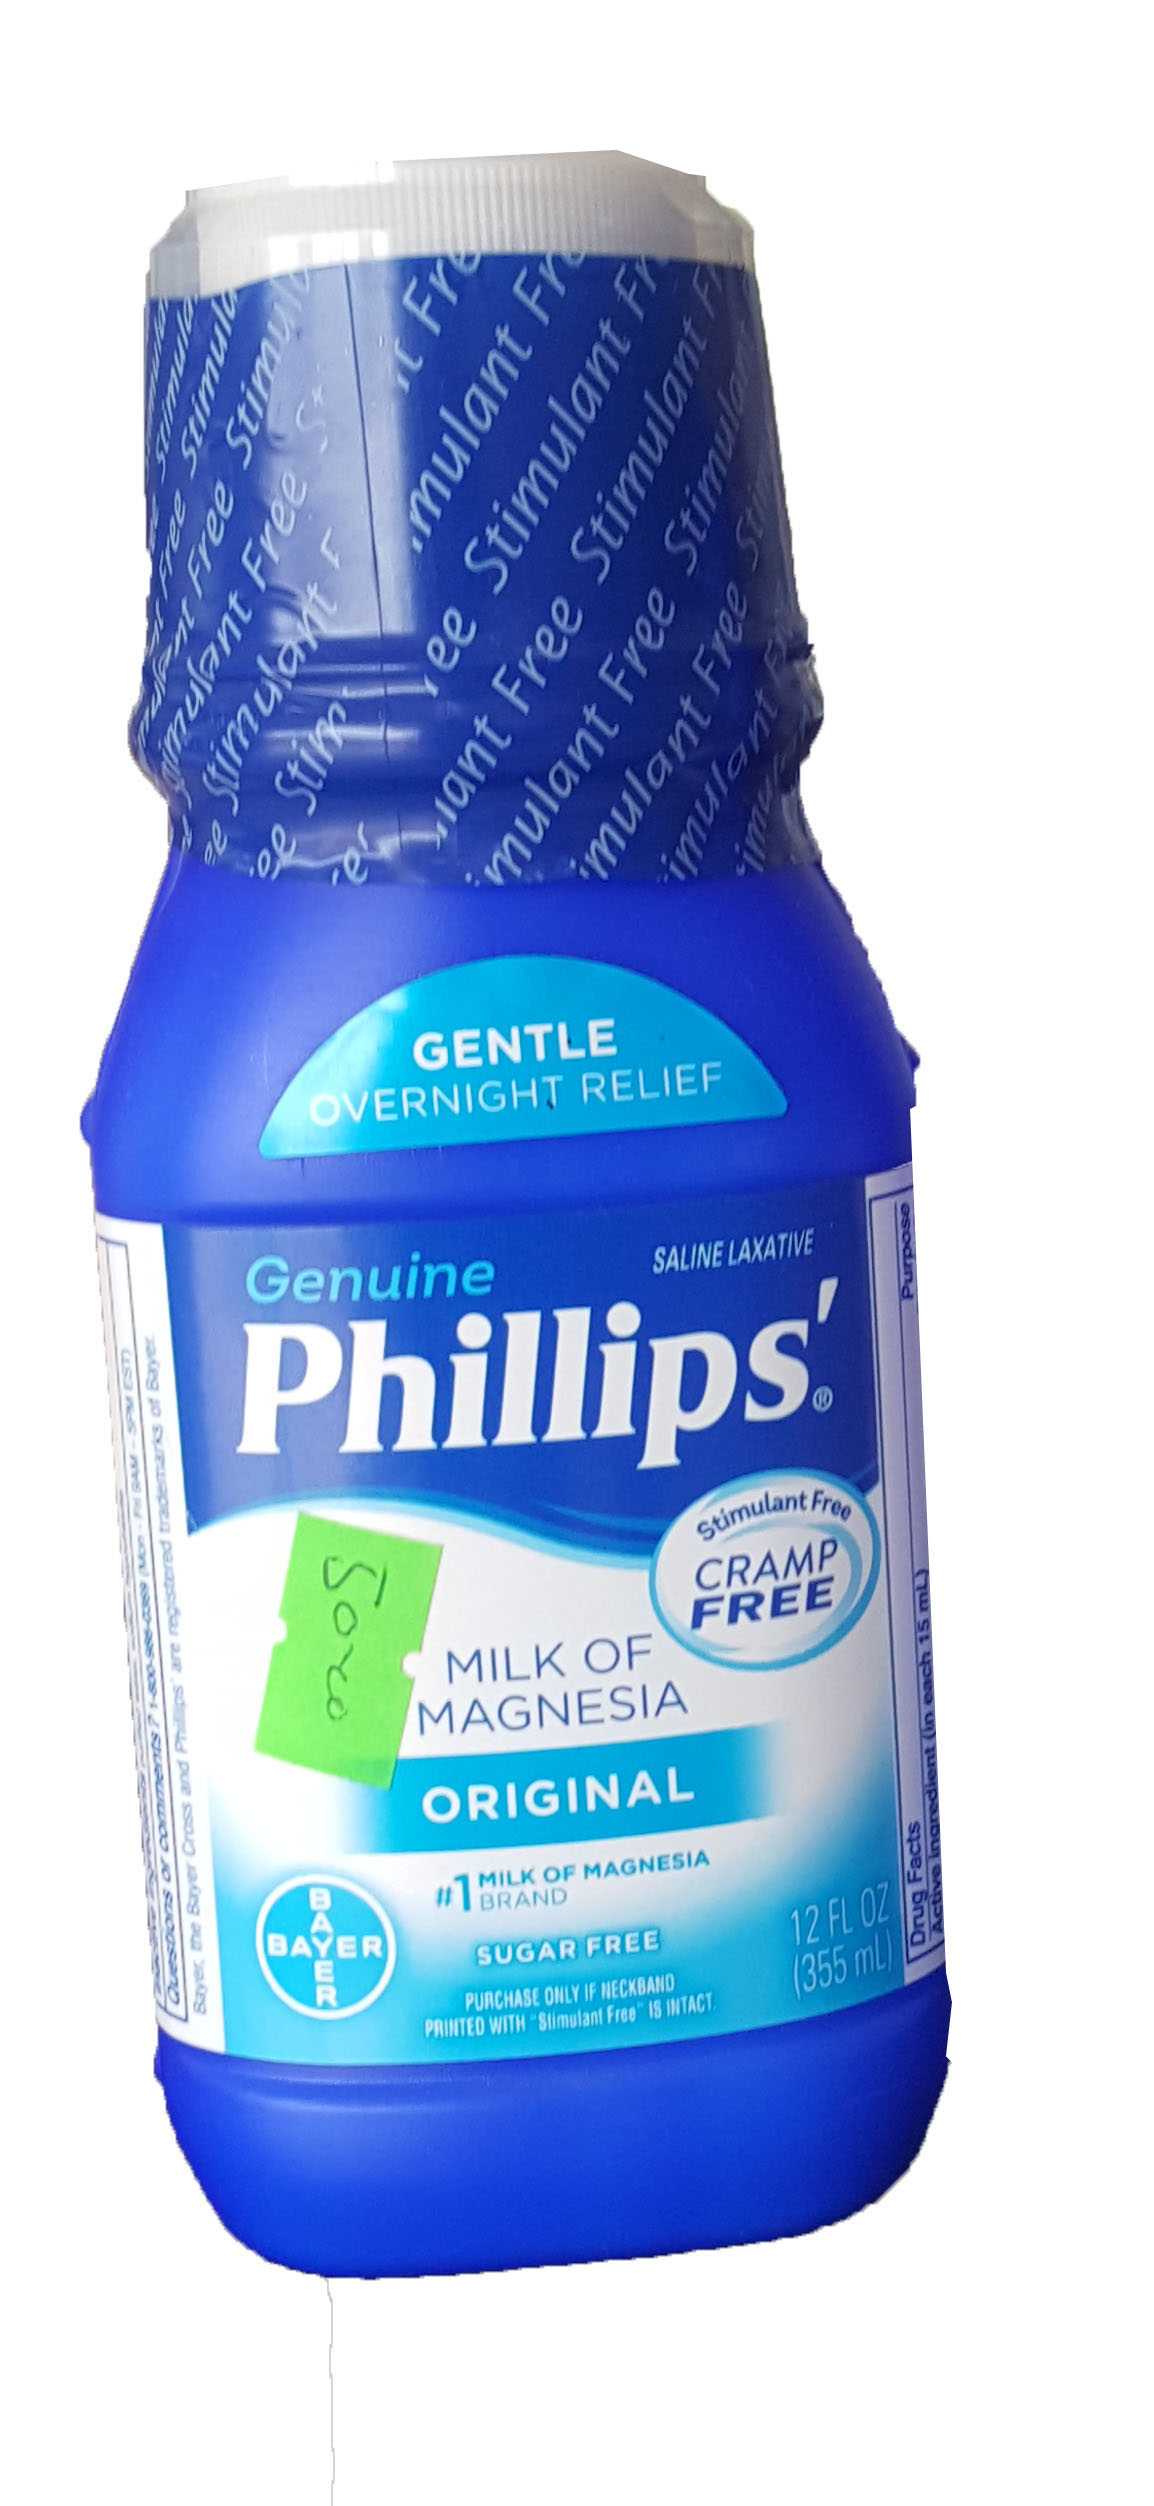 Philips Milk Of Magnesia Benijax Pharmacy